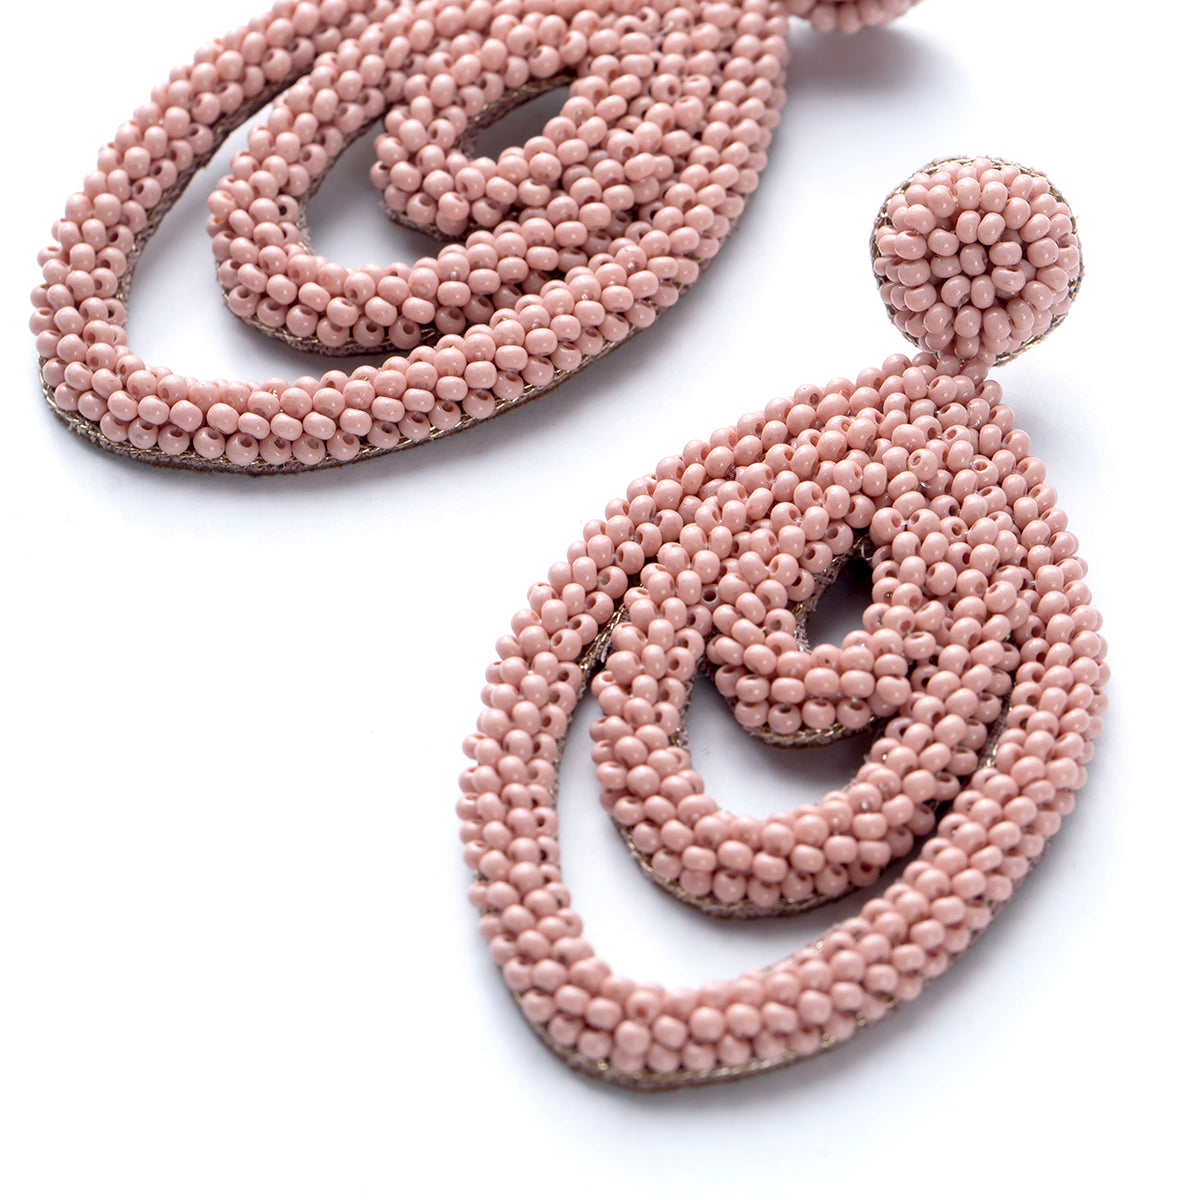 Deepa by Deepa Gurnani Handmade Dusty Pink Mirabai Earrings